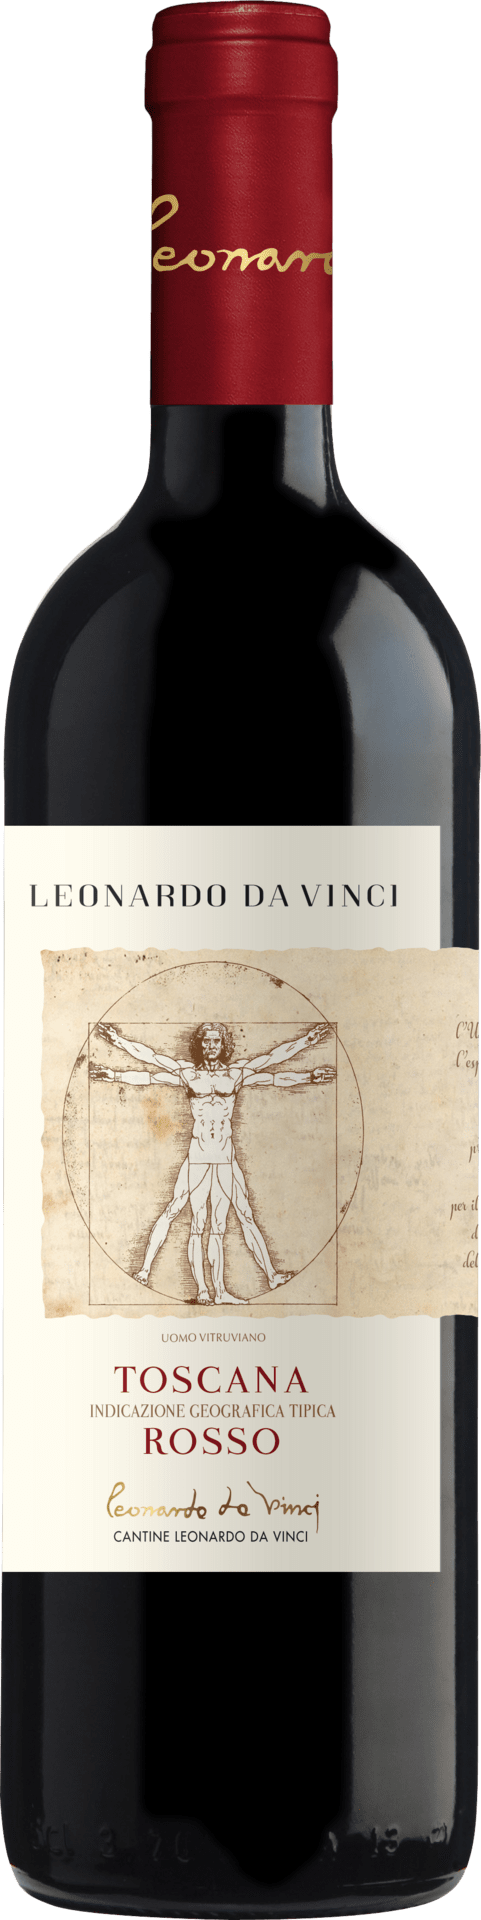 Leonardo da Vinci Rosso Toscana IGT - StillWine GmbH